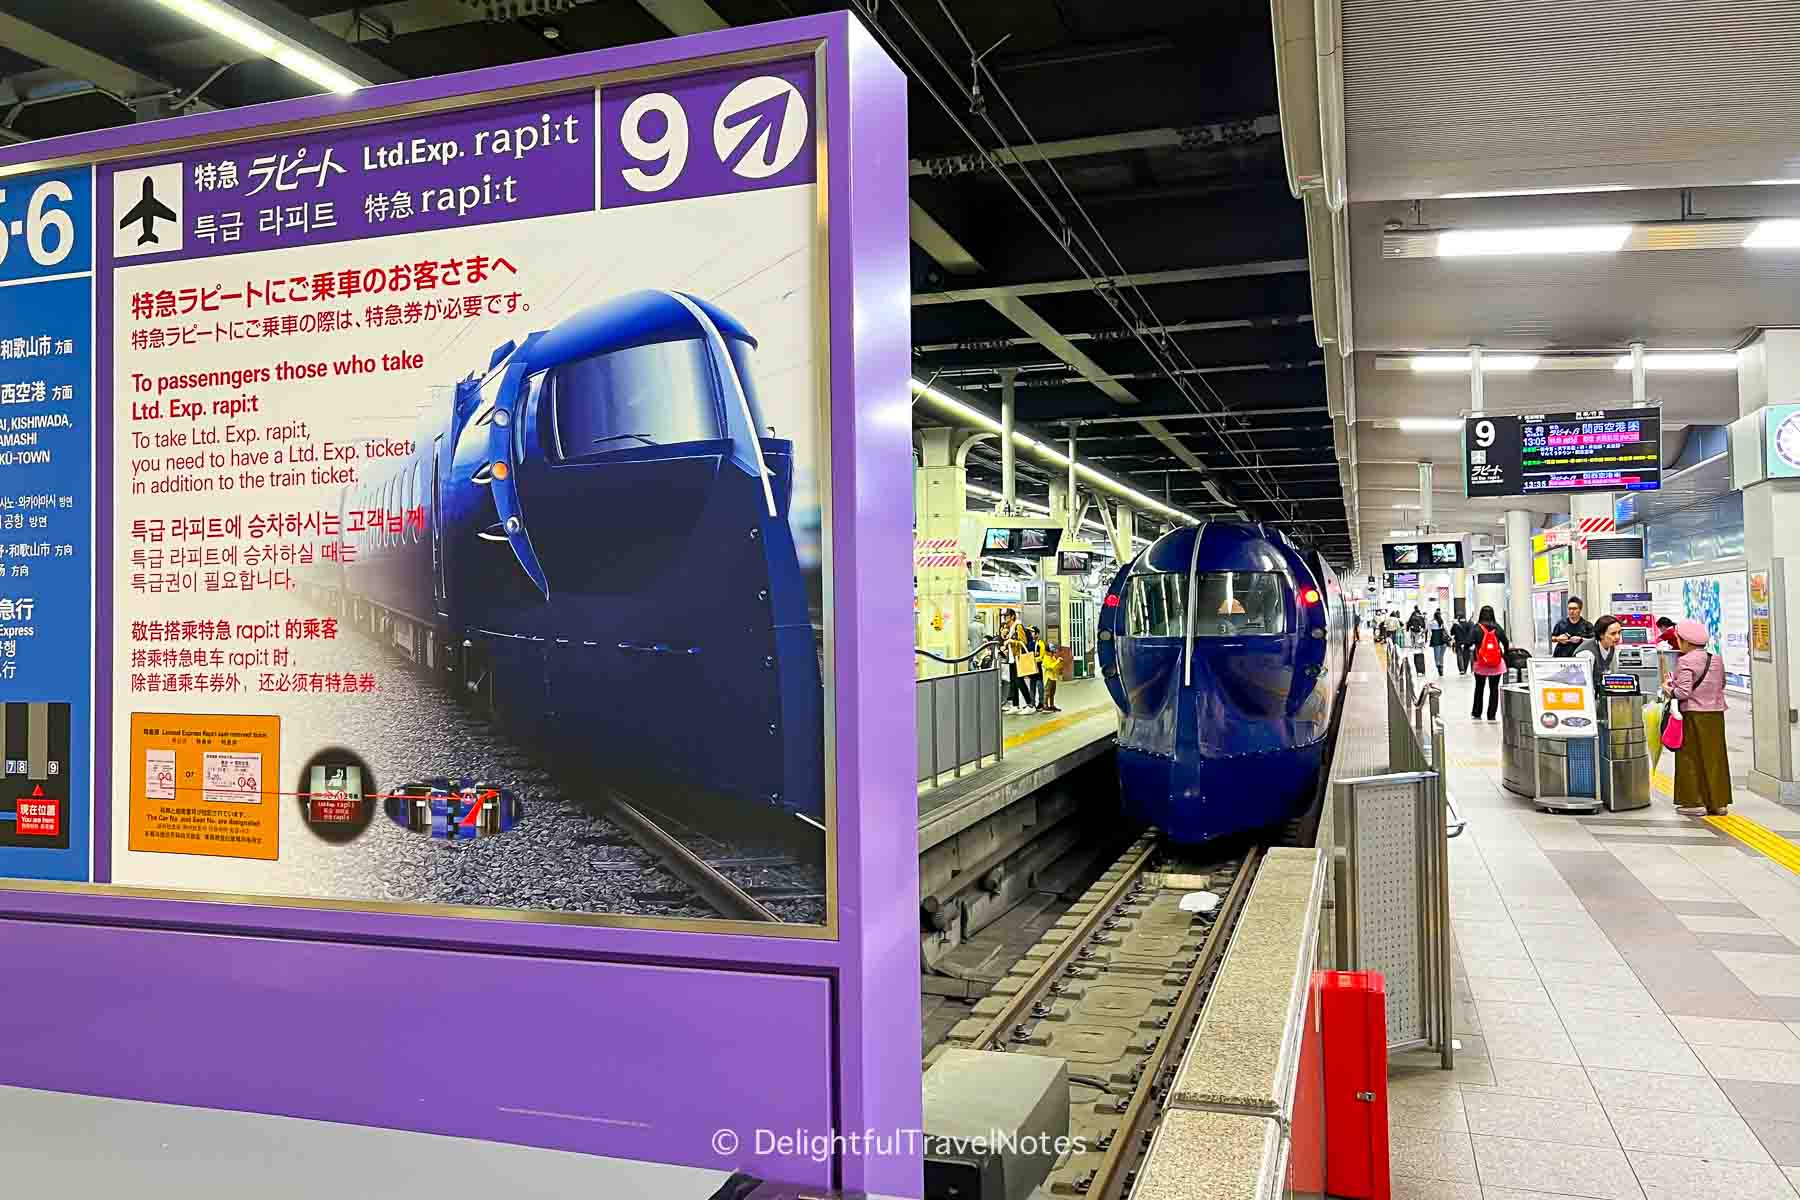 Nankai Limited Express Rapit train waiting on the platform at Nankai Namba Station in Osaka.